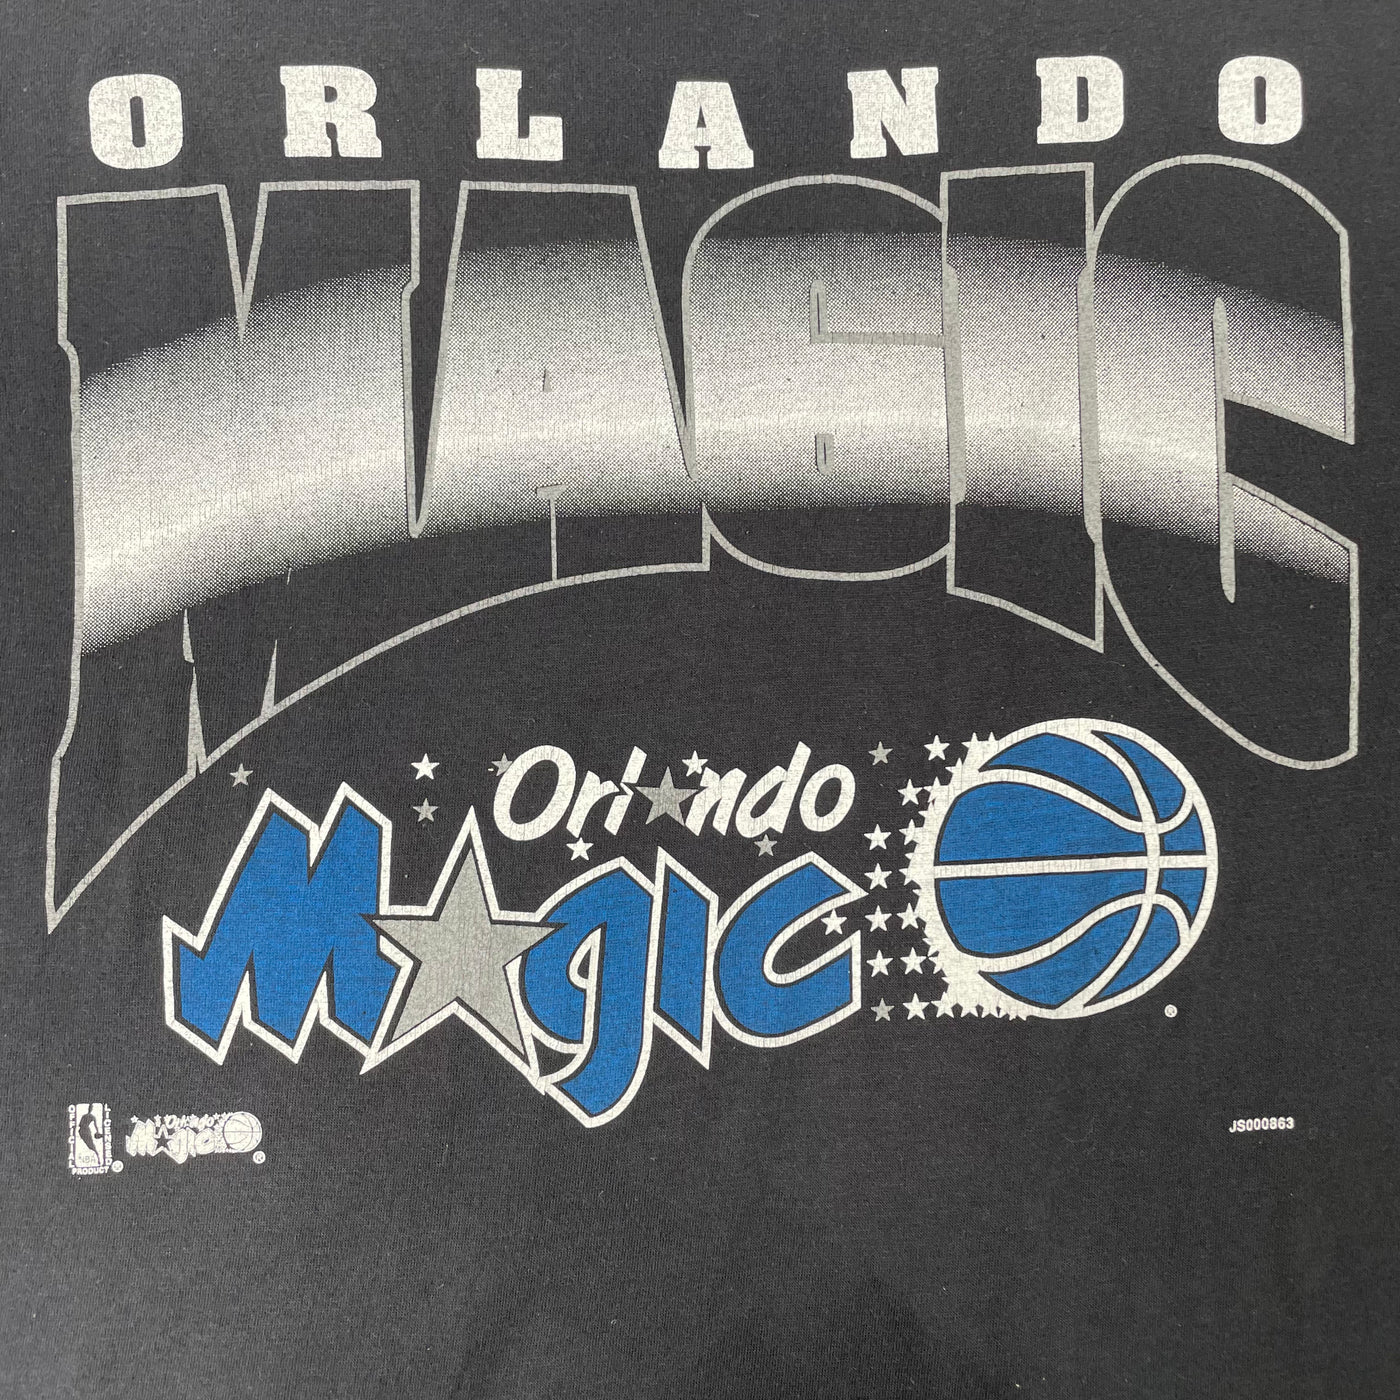 00's Orlando Magic Black Sports T-shirt sz 3XL